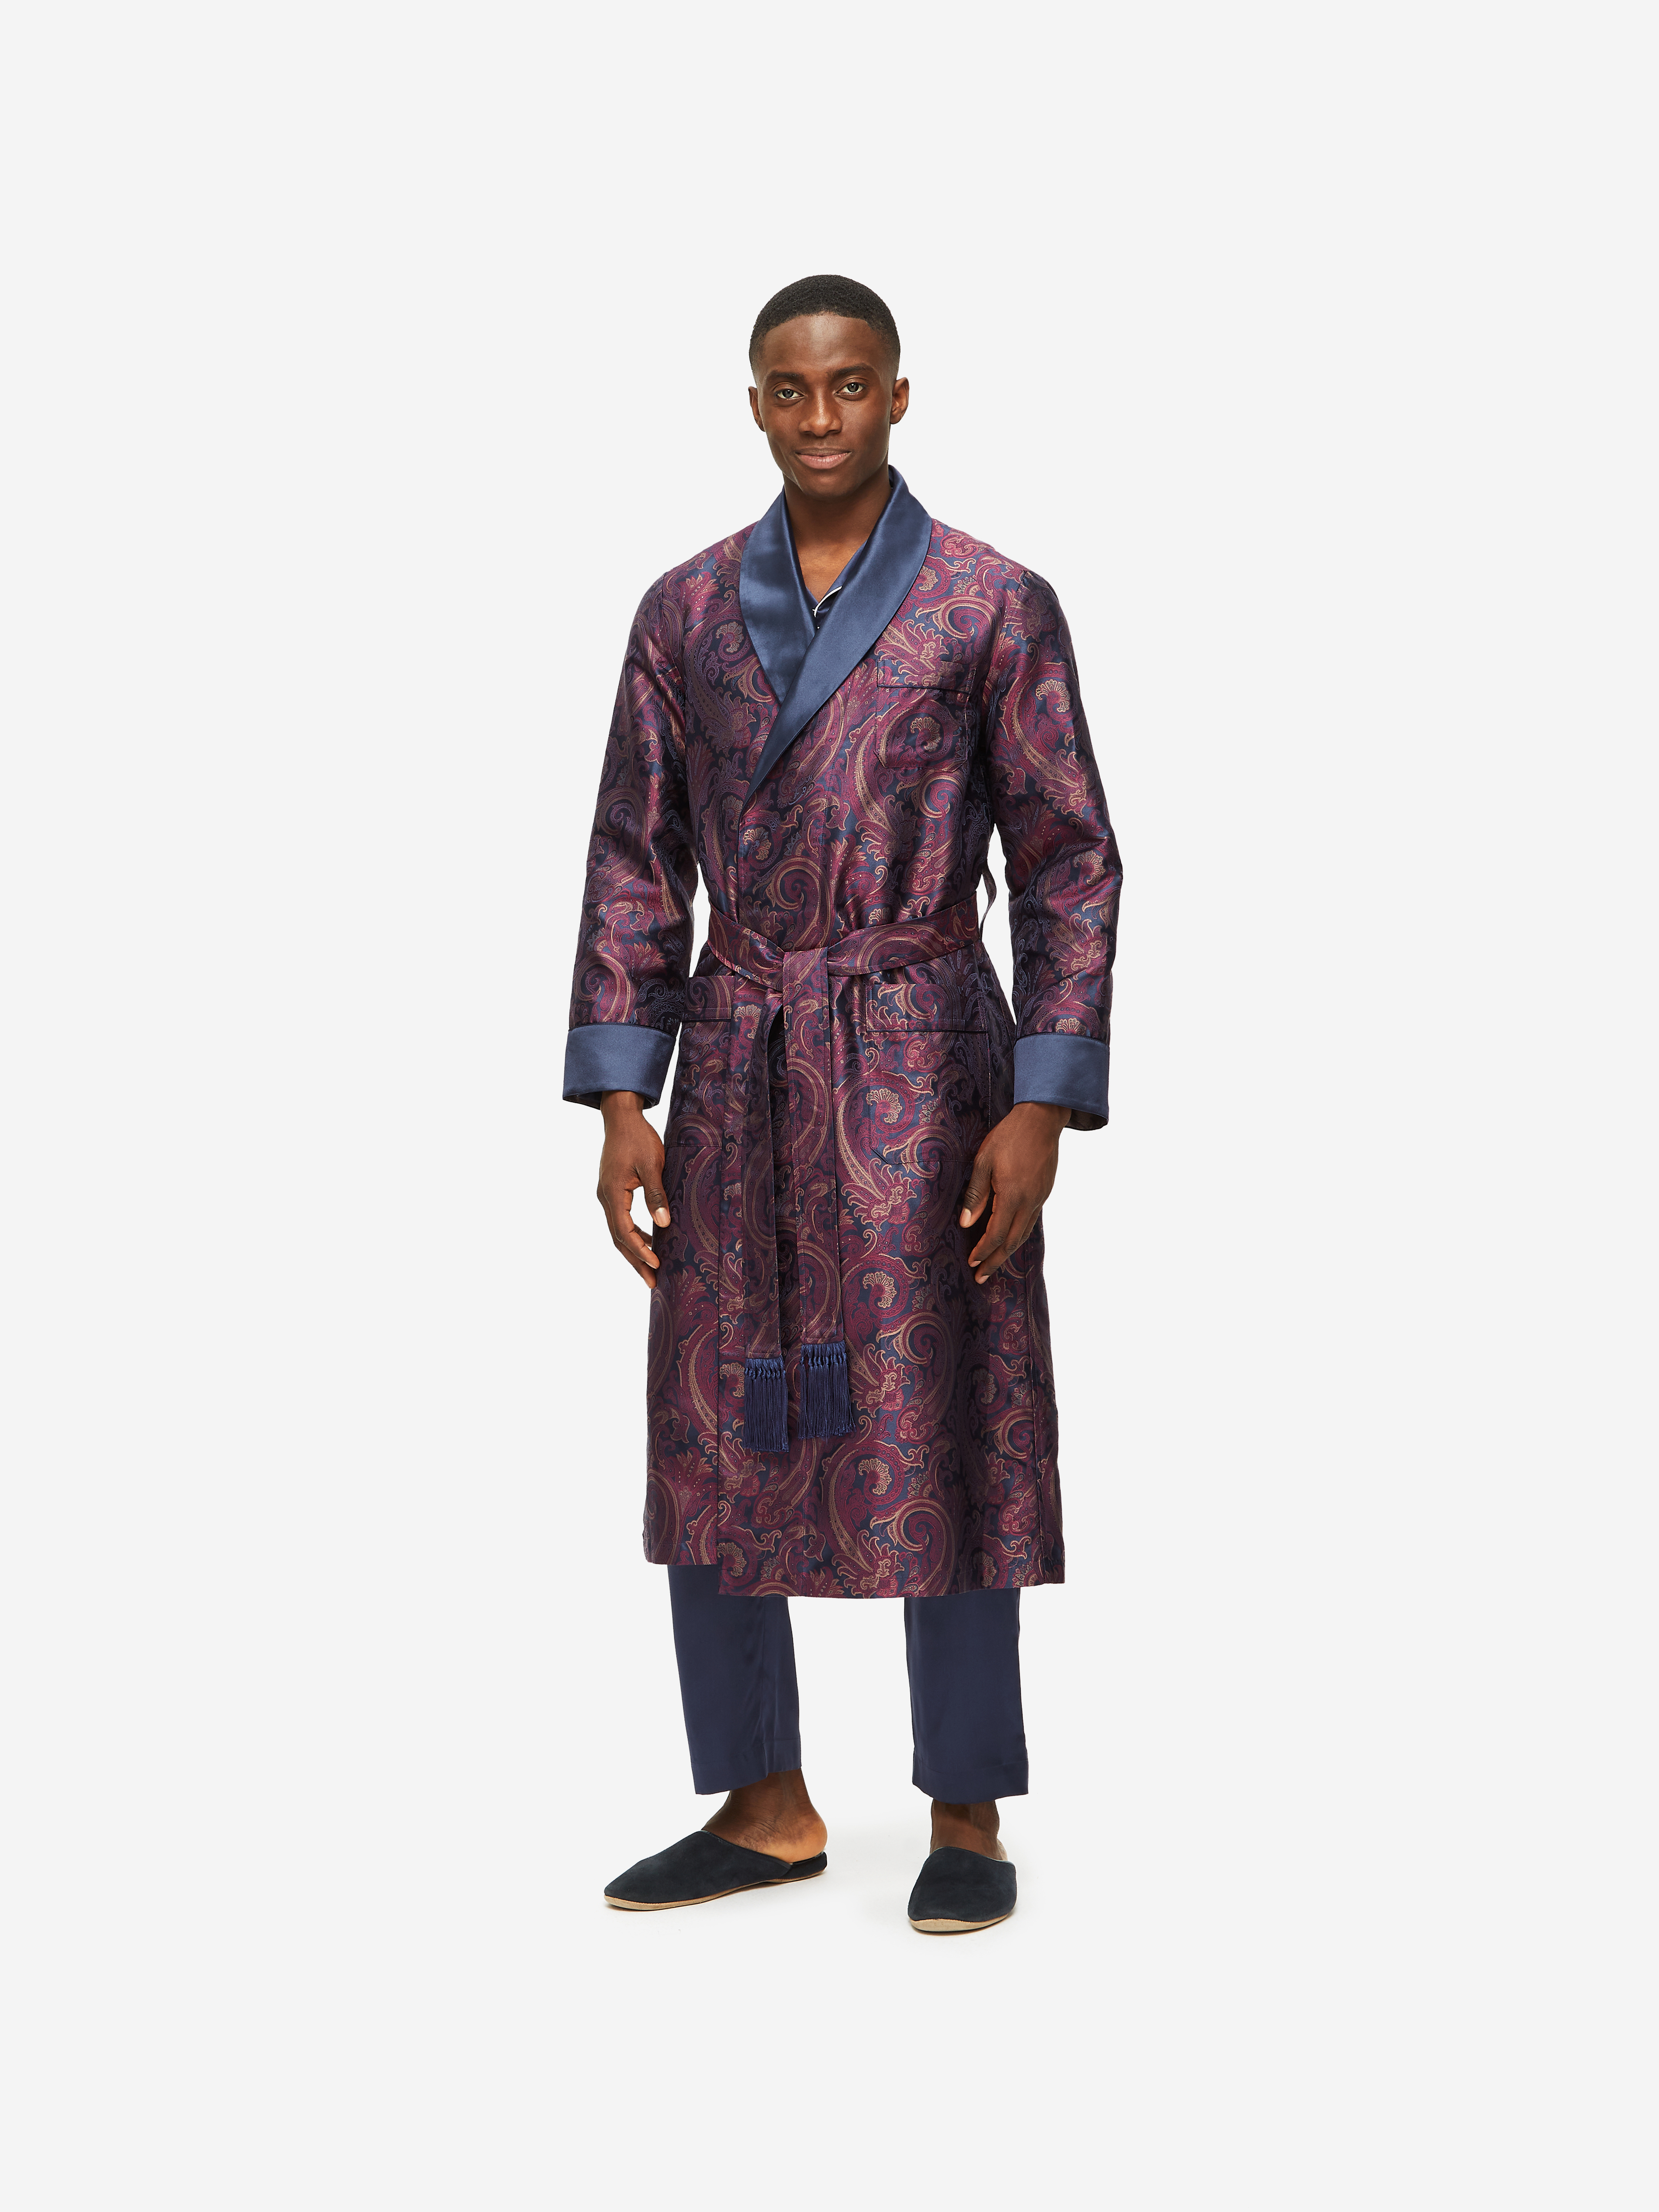 Space Black Silk Robe for Men, Dressing Gown, Reversible Robe, Men's Long  Bathrobe, Silk Kimono Robe, Sleepwear, Loungwear, Groomsmen Gift - Etsy